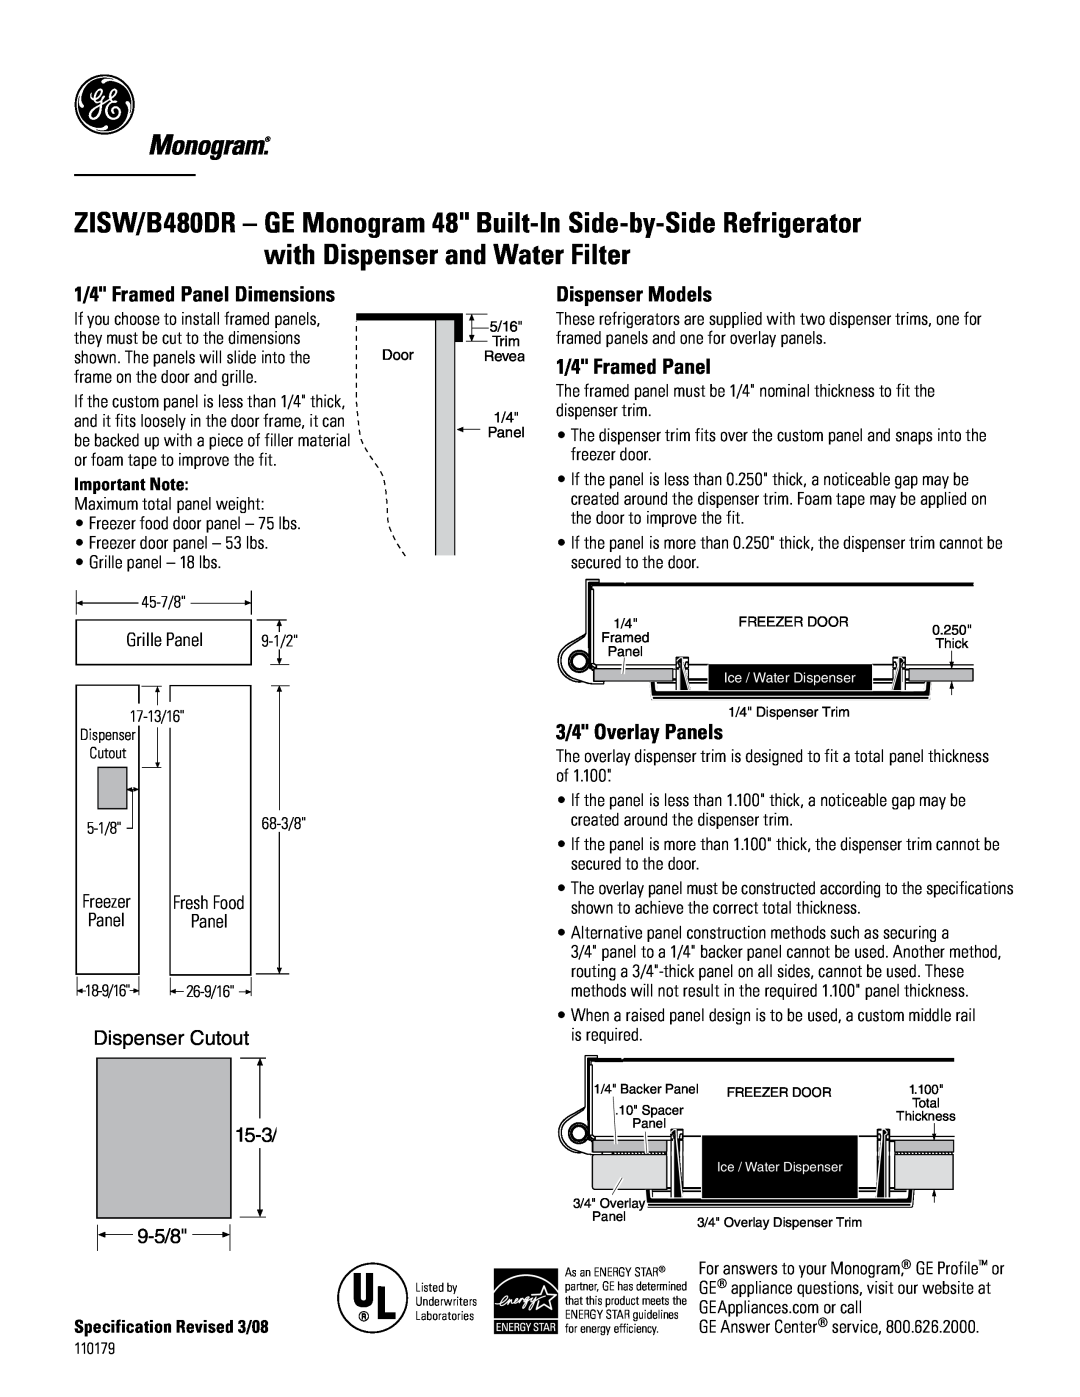 GE B480DR 1/4 Framed Panel Dimensions, Dispenser Models, 3/4 Overlay Panels, Dispenser Cutout, 15-3 9-5/8, Grille Panel 